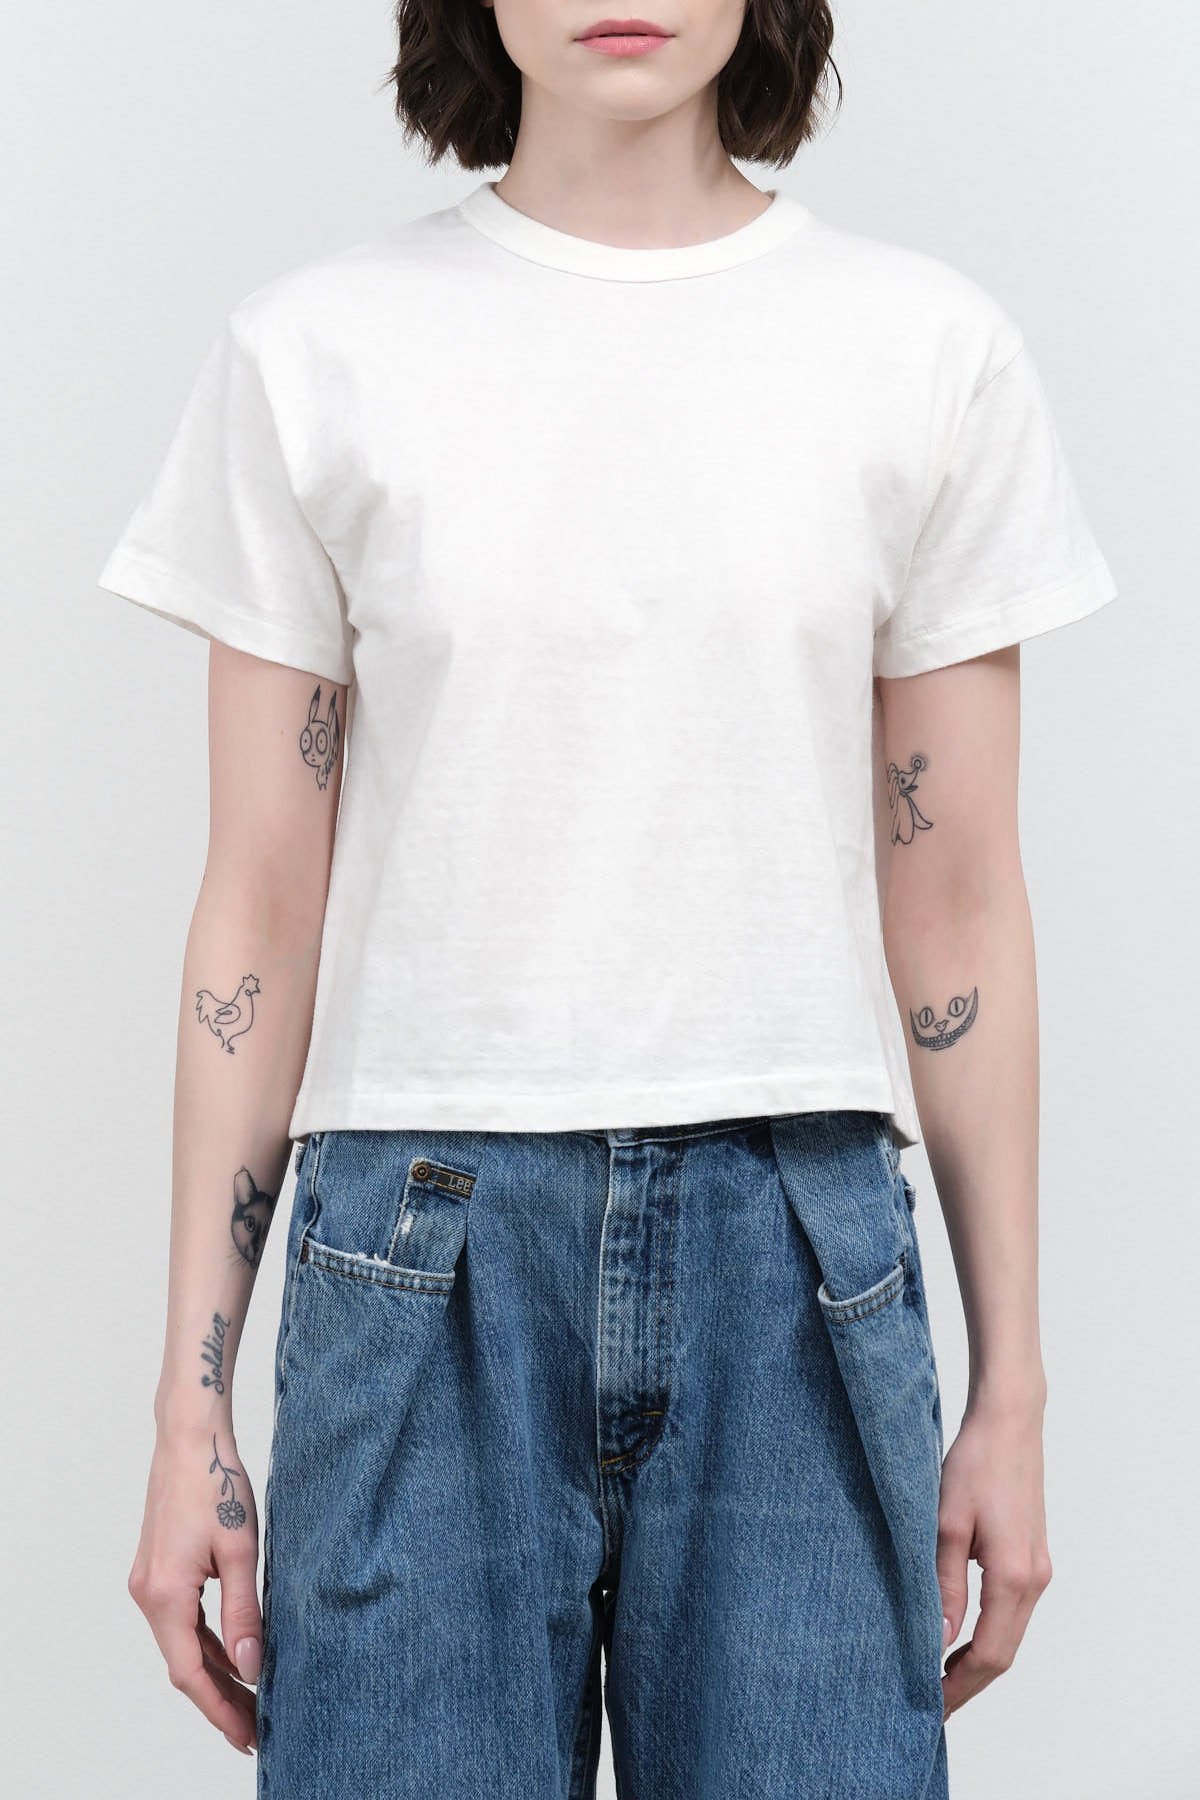 Hi'aka T-Shirt by Sunray Sportswear in Off White